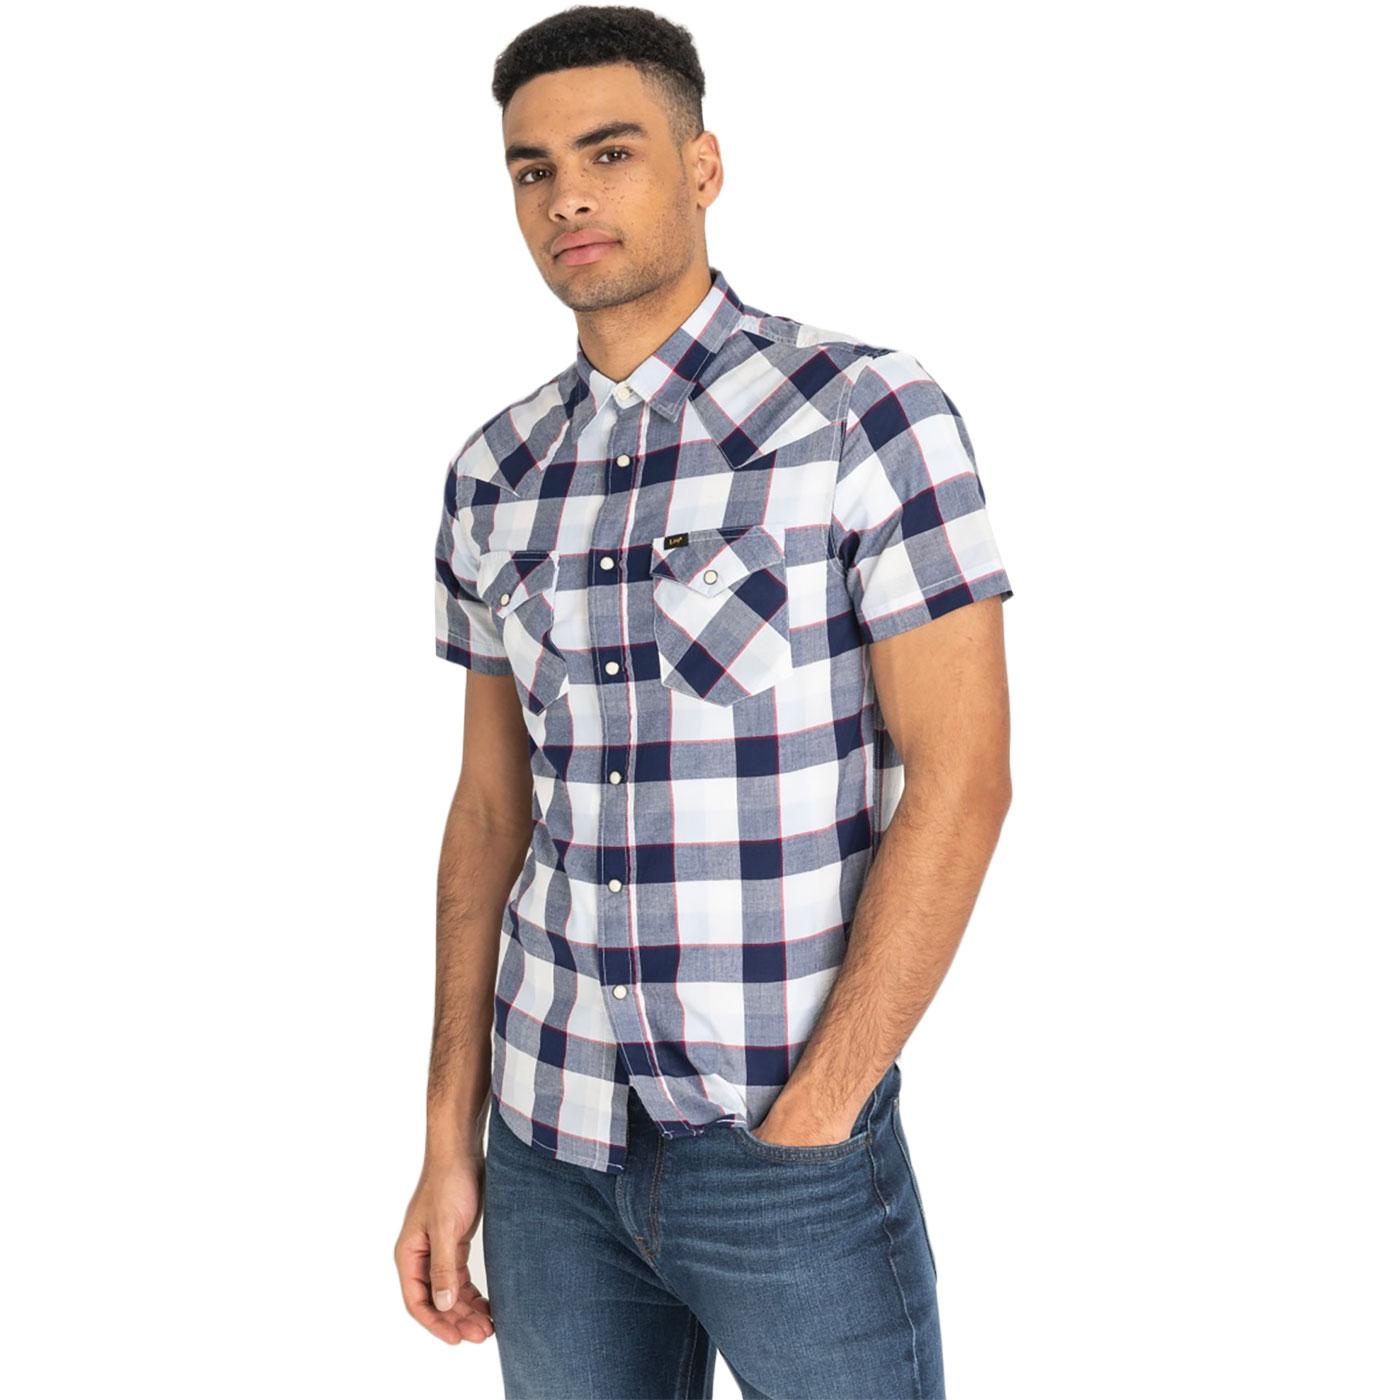 LEE Retro Mod Short Sleeve Check Western Shirt in Blueprint